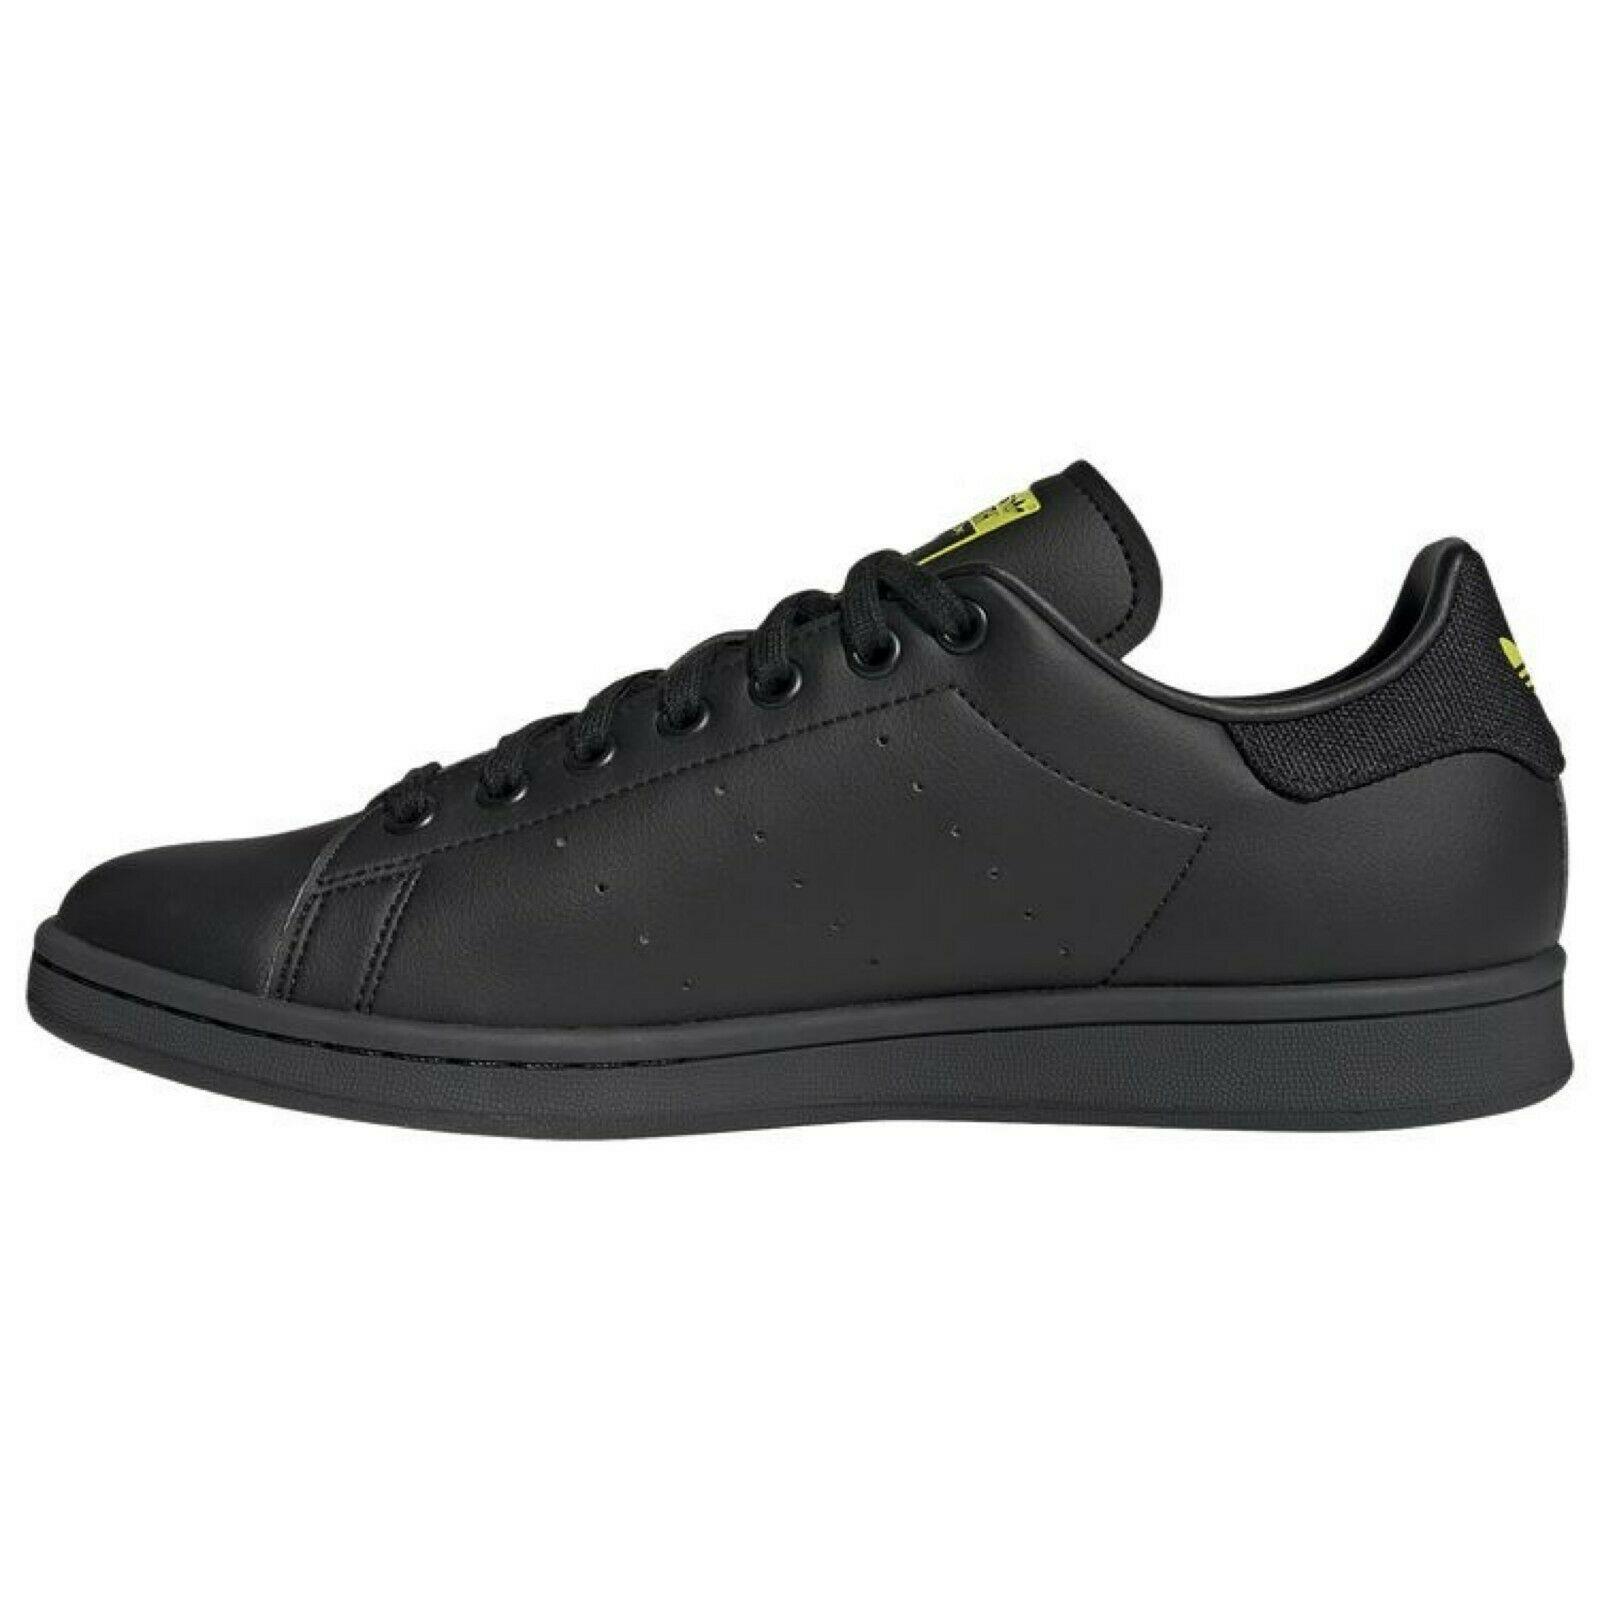 Adidas shoes Originals Stan Smith - Black , Black/Volt Manufacturer 9